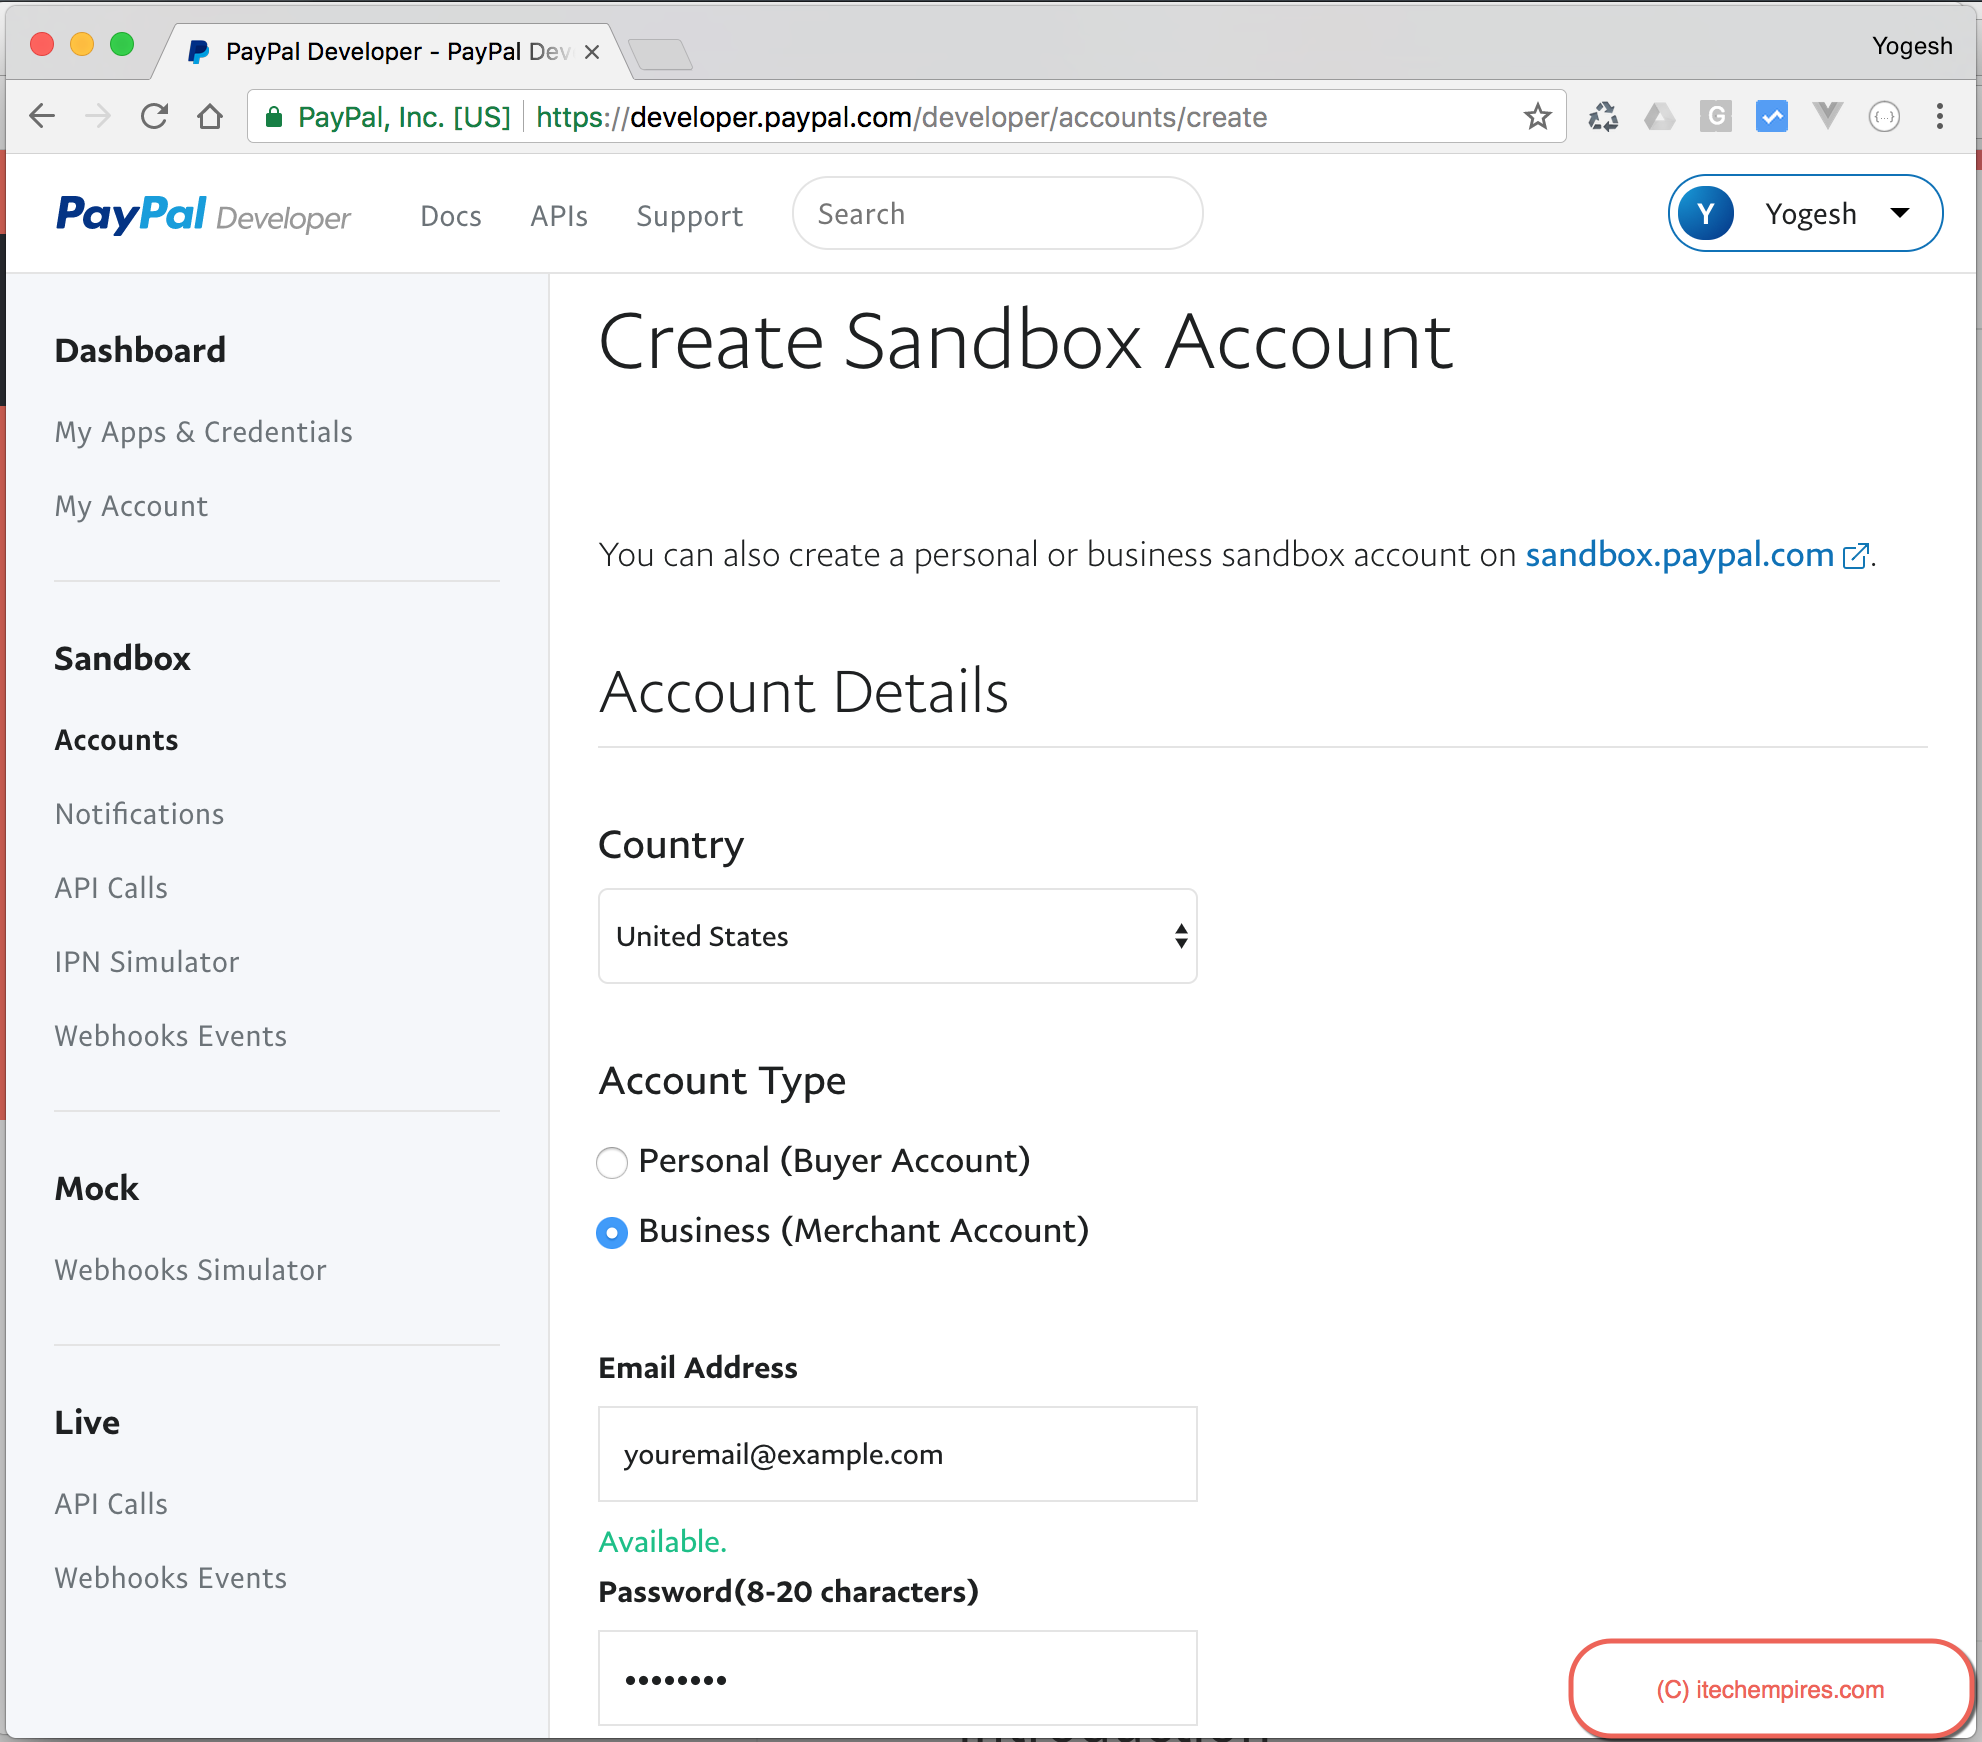 Create Sandbox account - Enter Account Details